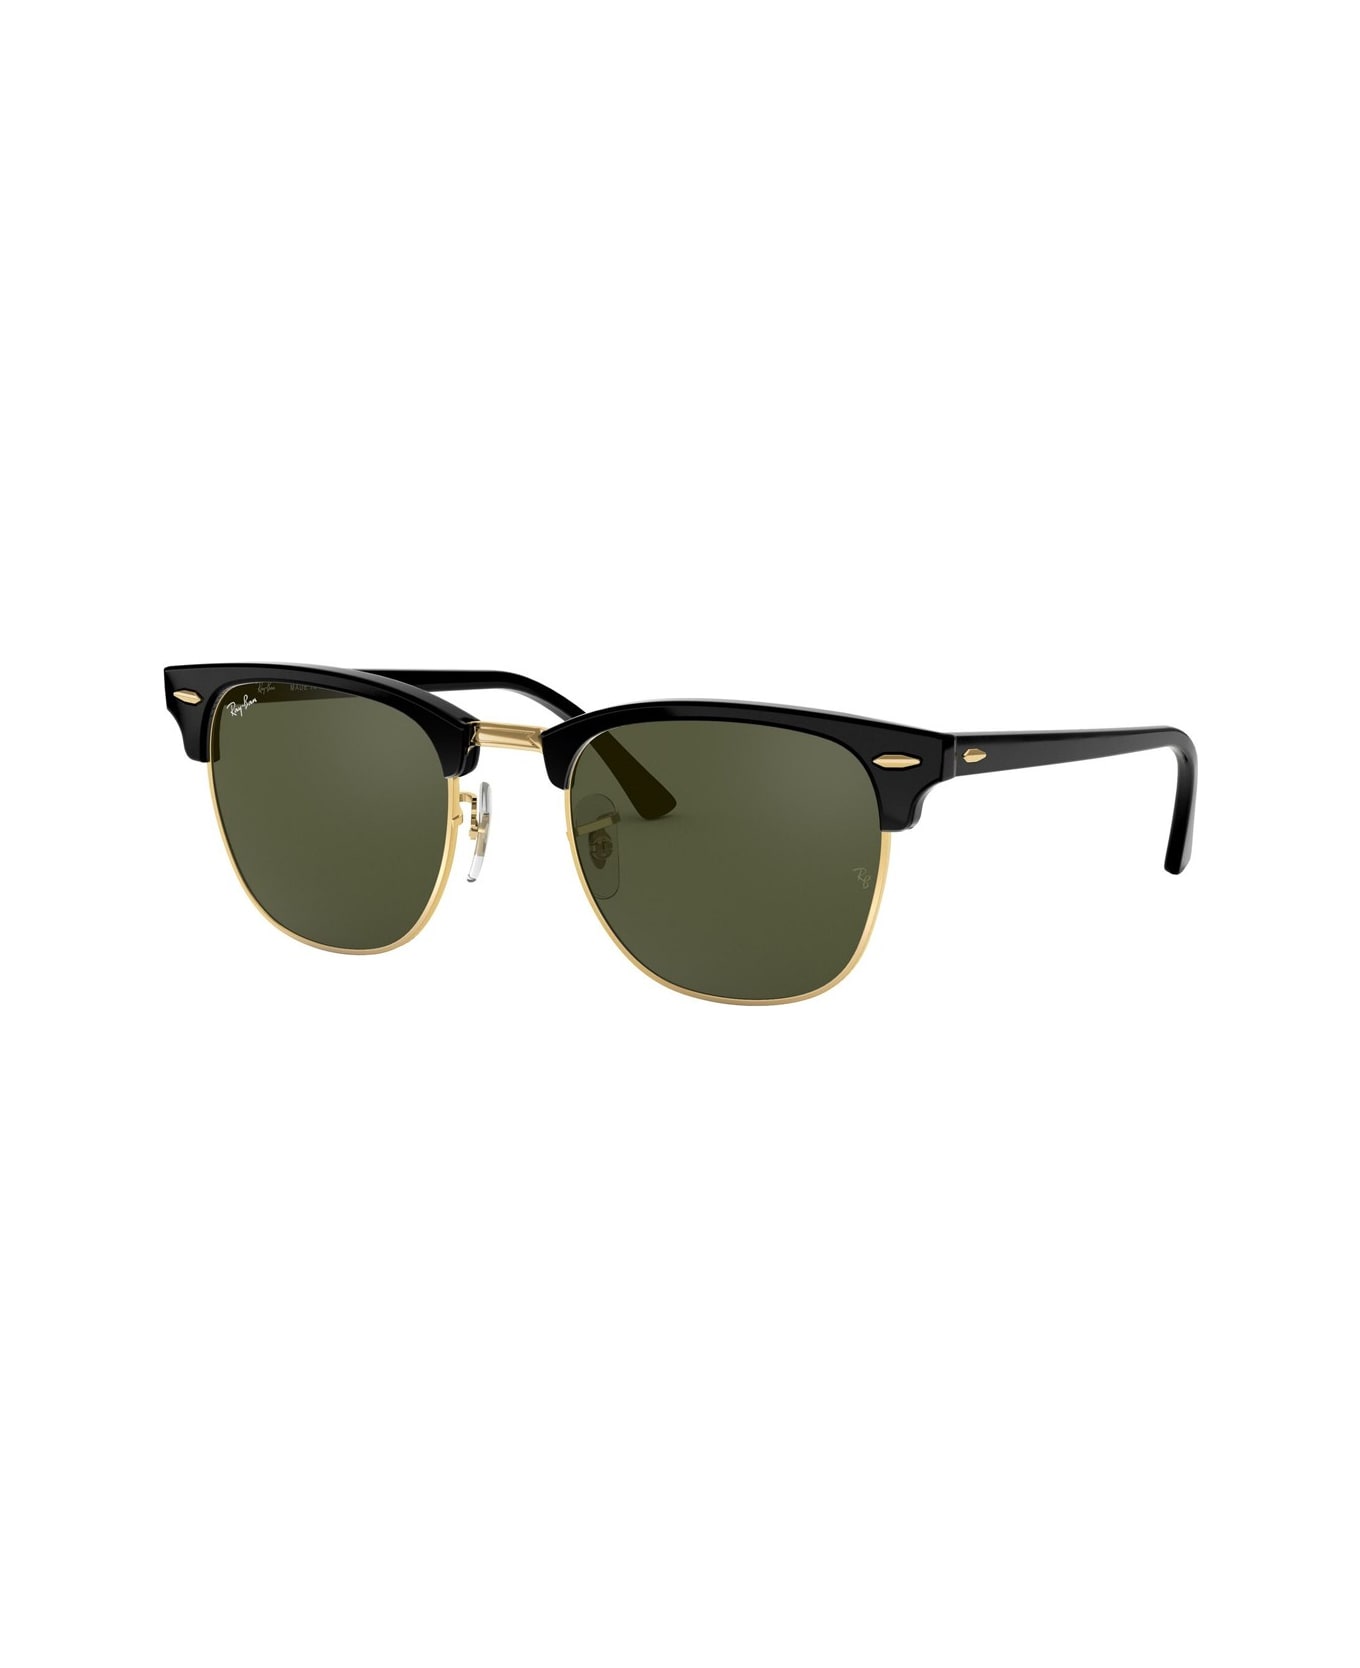 Ray-Ban Clubmaster Rb 3016 Sunglasses - Nero